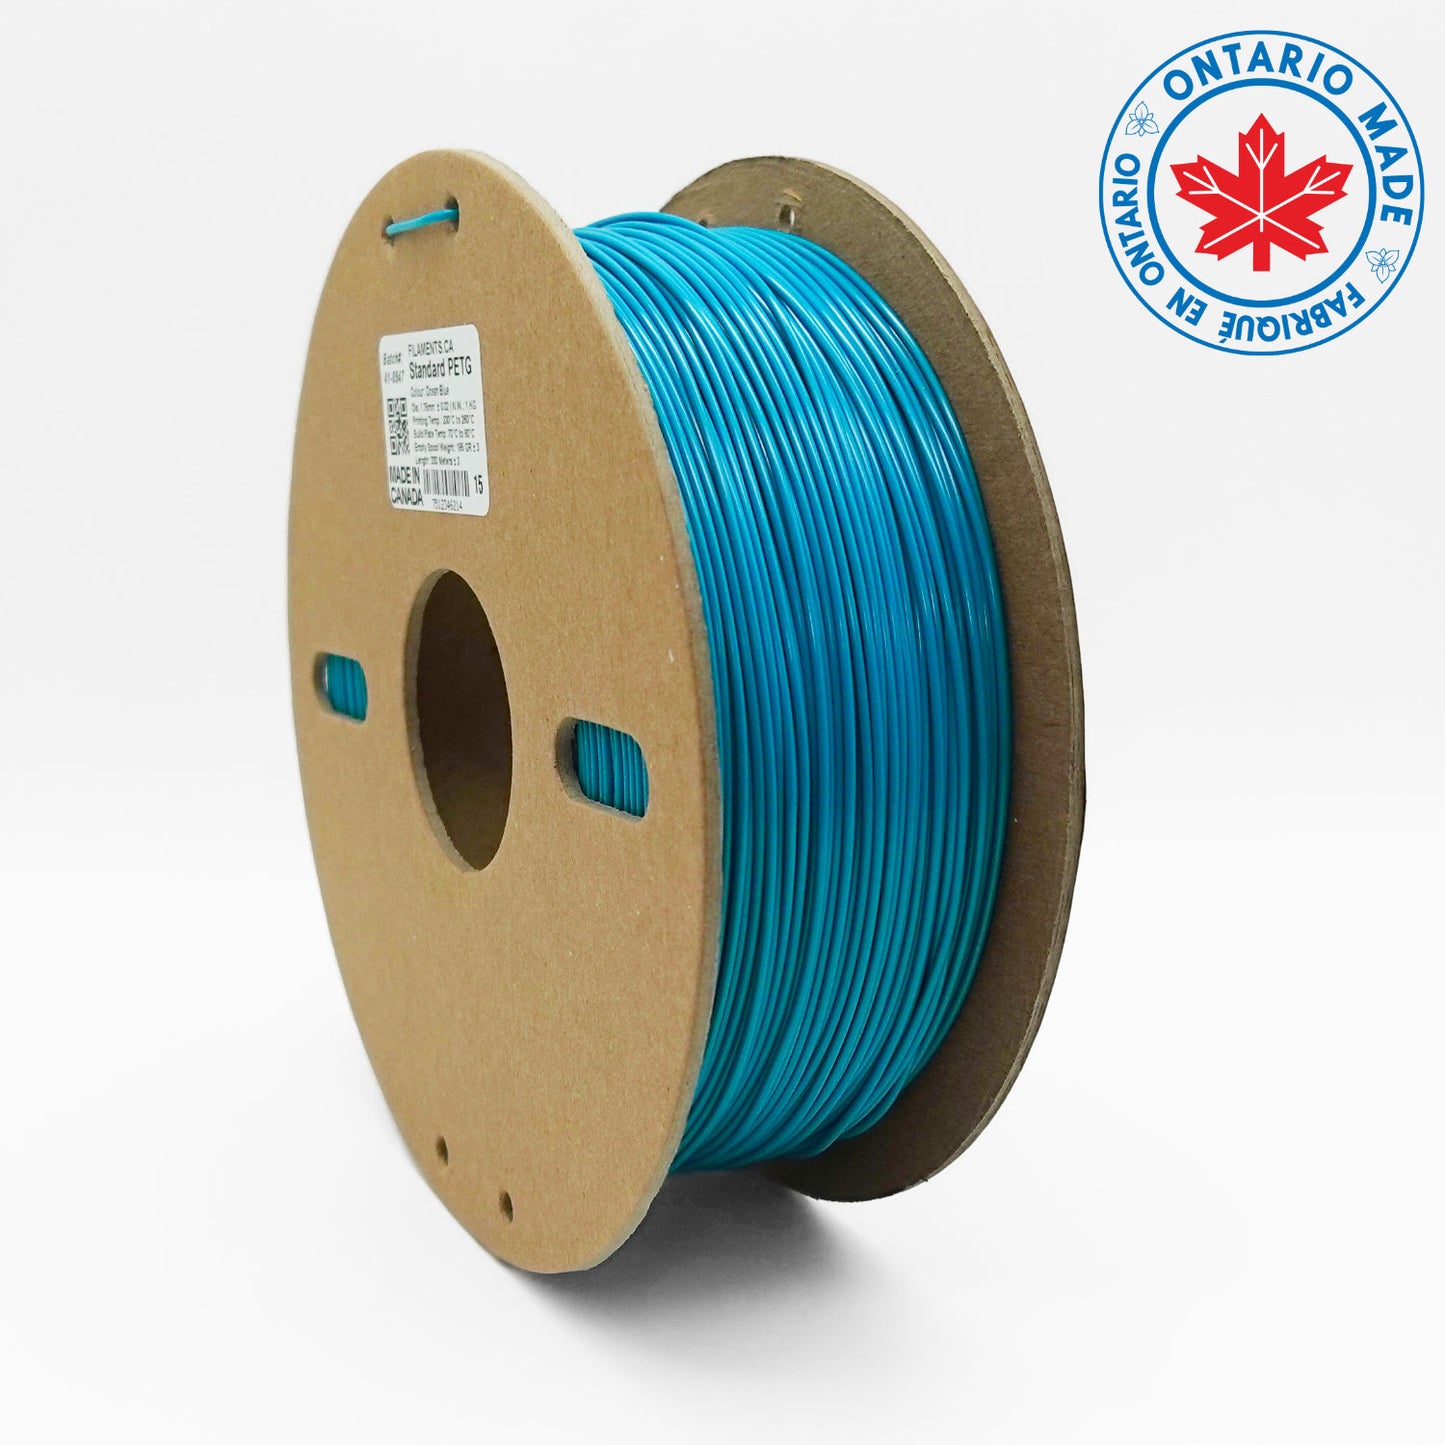 Standard PETG Filament - Ocean Blue - 1.75mm - 1KG –